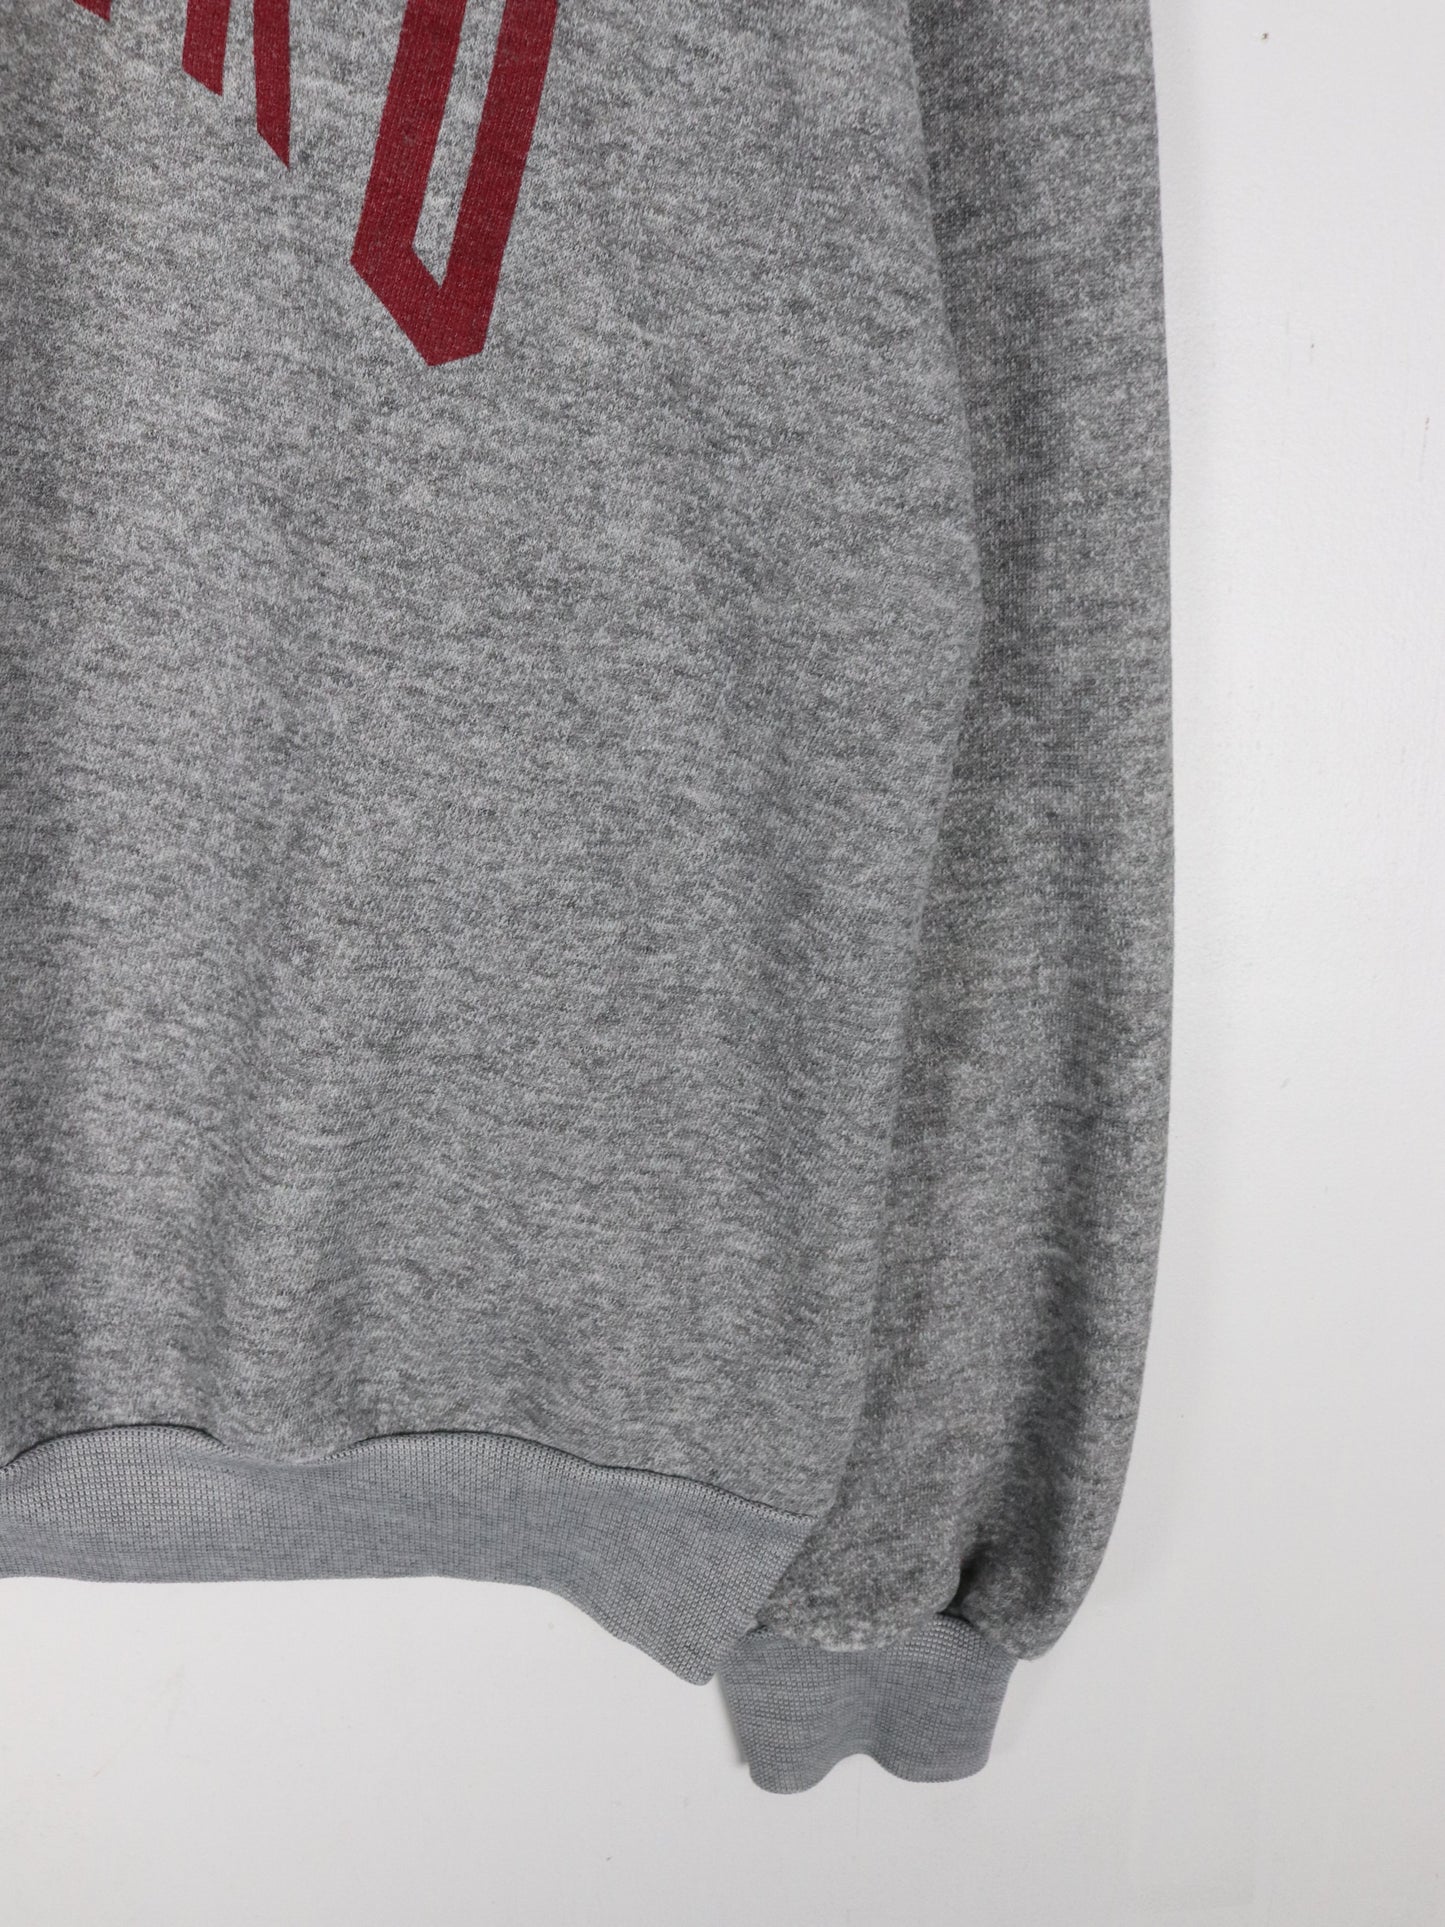 Vintage Harvard University Sweatshirt Mens Medium Grey College